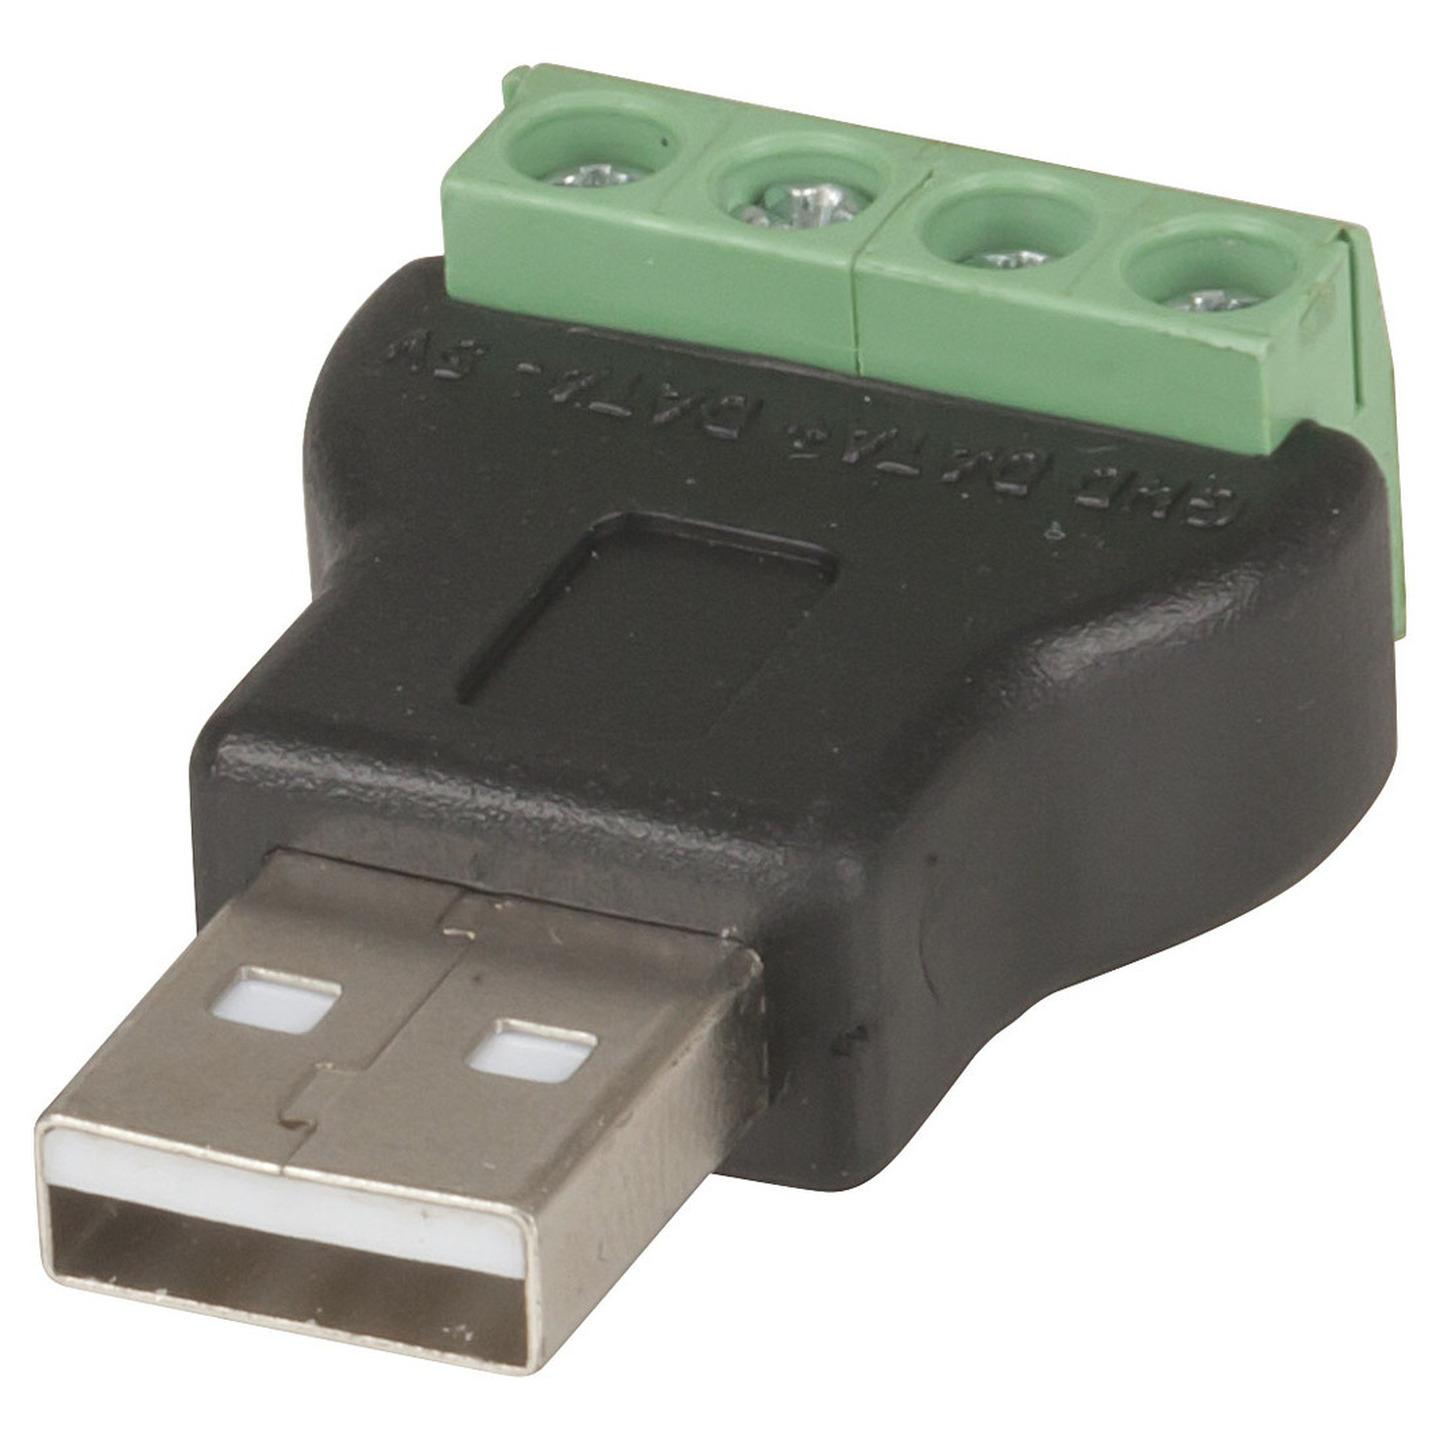 USB 2.0 Type-A Plug to 4-Way Screw Terminal Header Adaptor